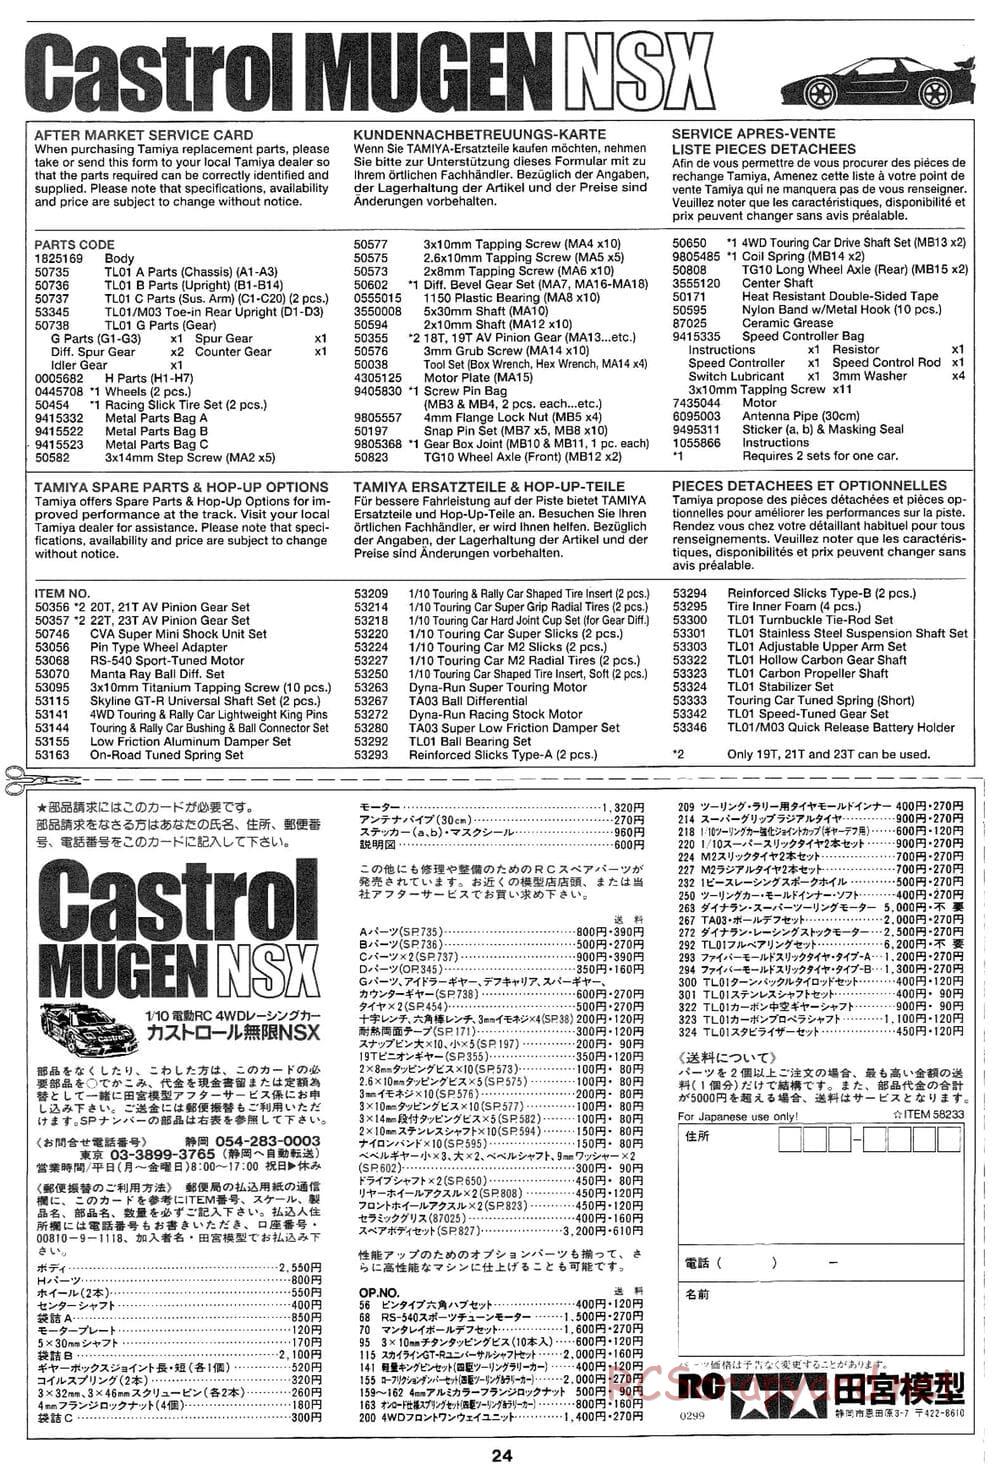 Tamiya - Castrol Mugen NSX - TL-01 Chassis - Manual - Page 24